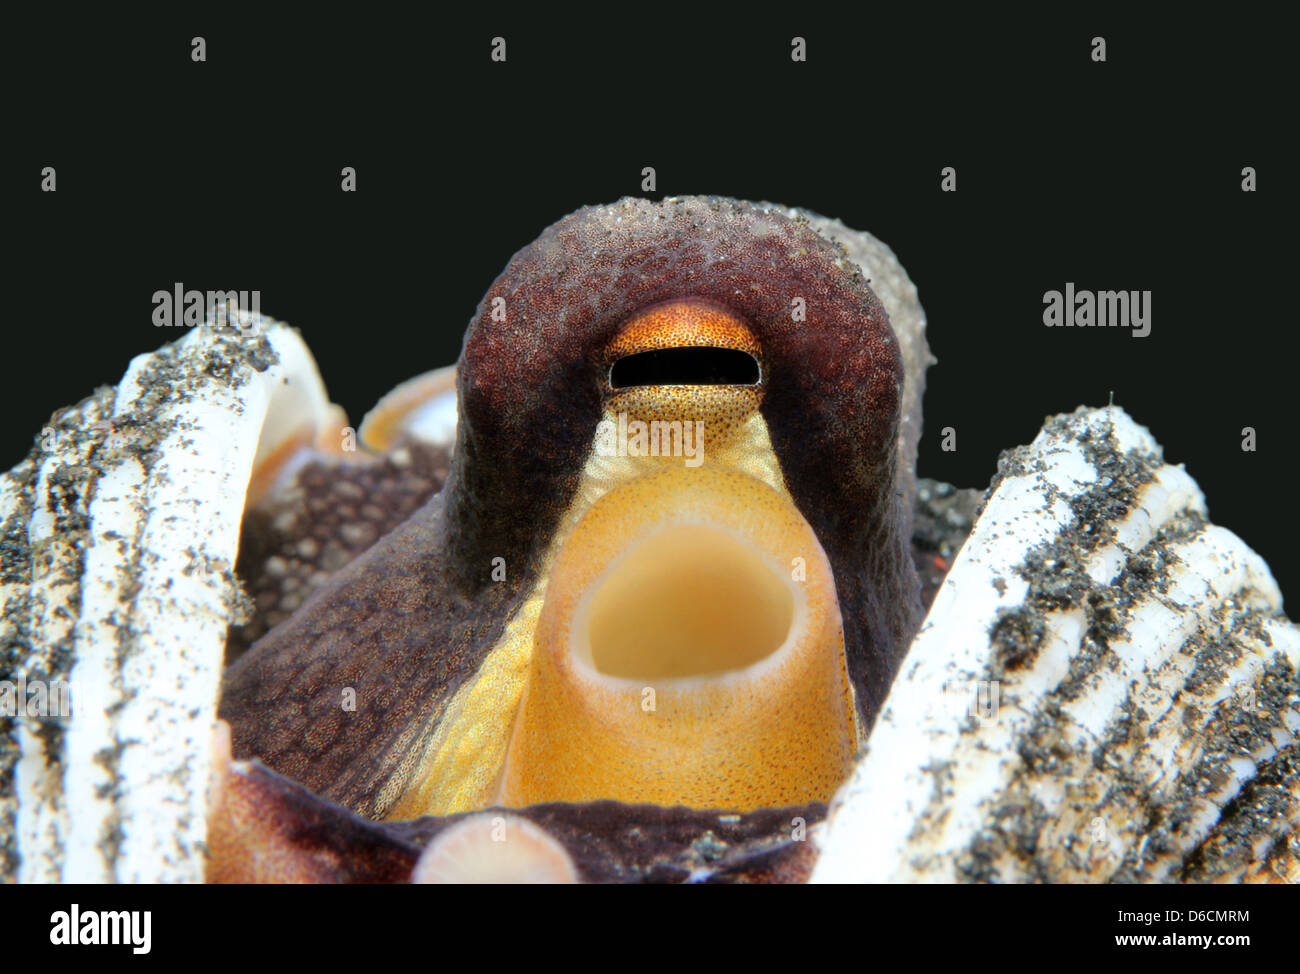 Close-up of a Coconut Octopus (Amphioctopus Marginatus) taking Shelter between Seashells, Lembeh Strait, Indonesia Stock Photo